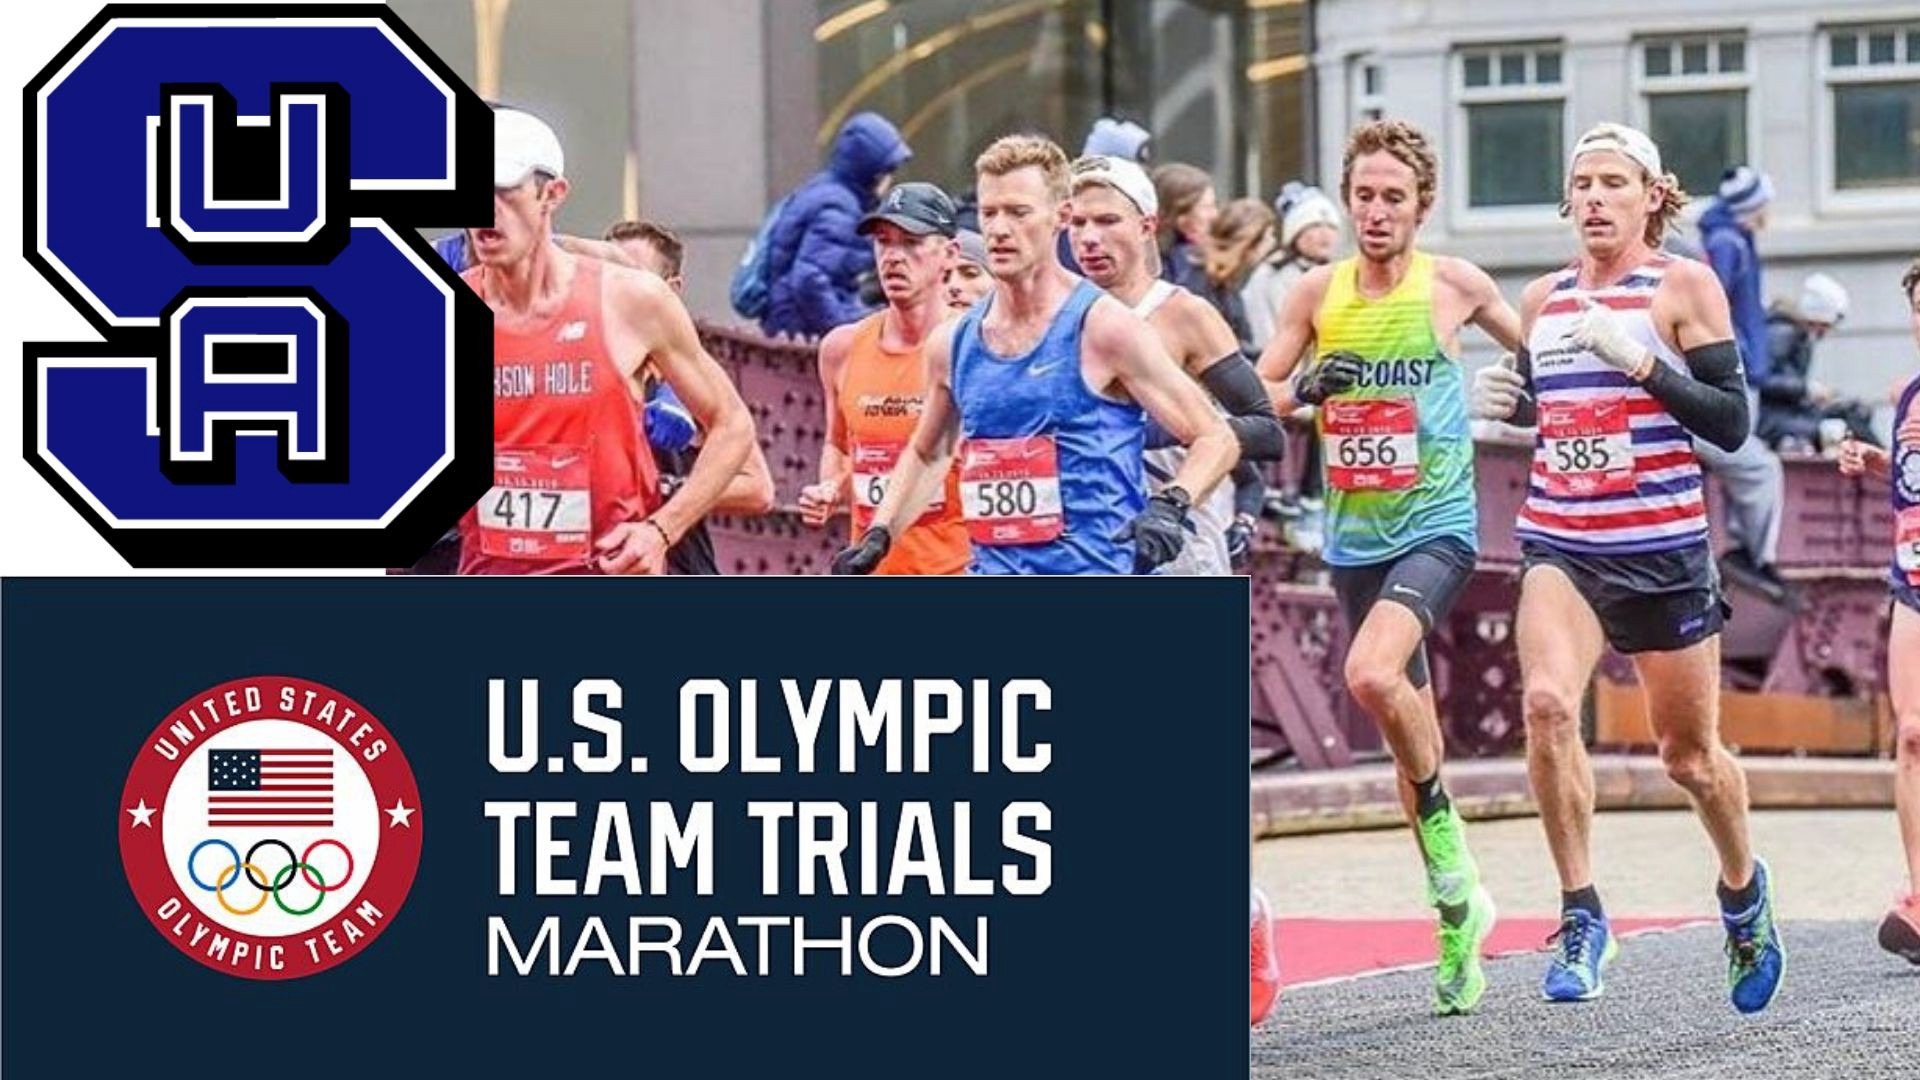 [LIVESTREAM] Marathon Olympic Trials 2020 Live Online Telegraph